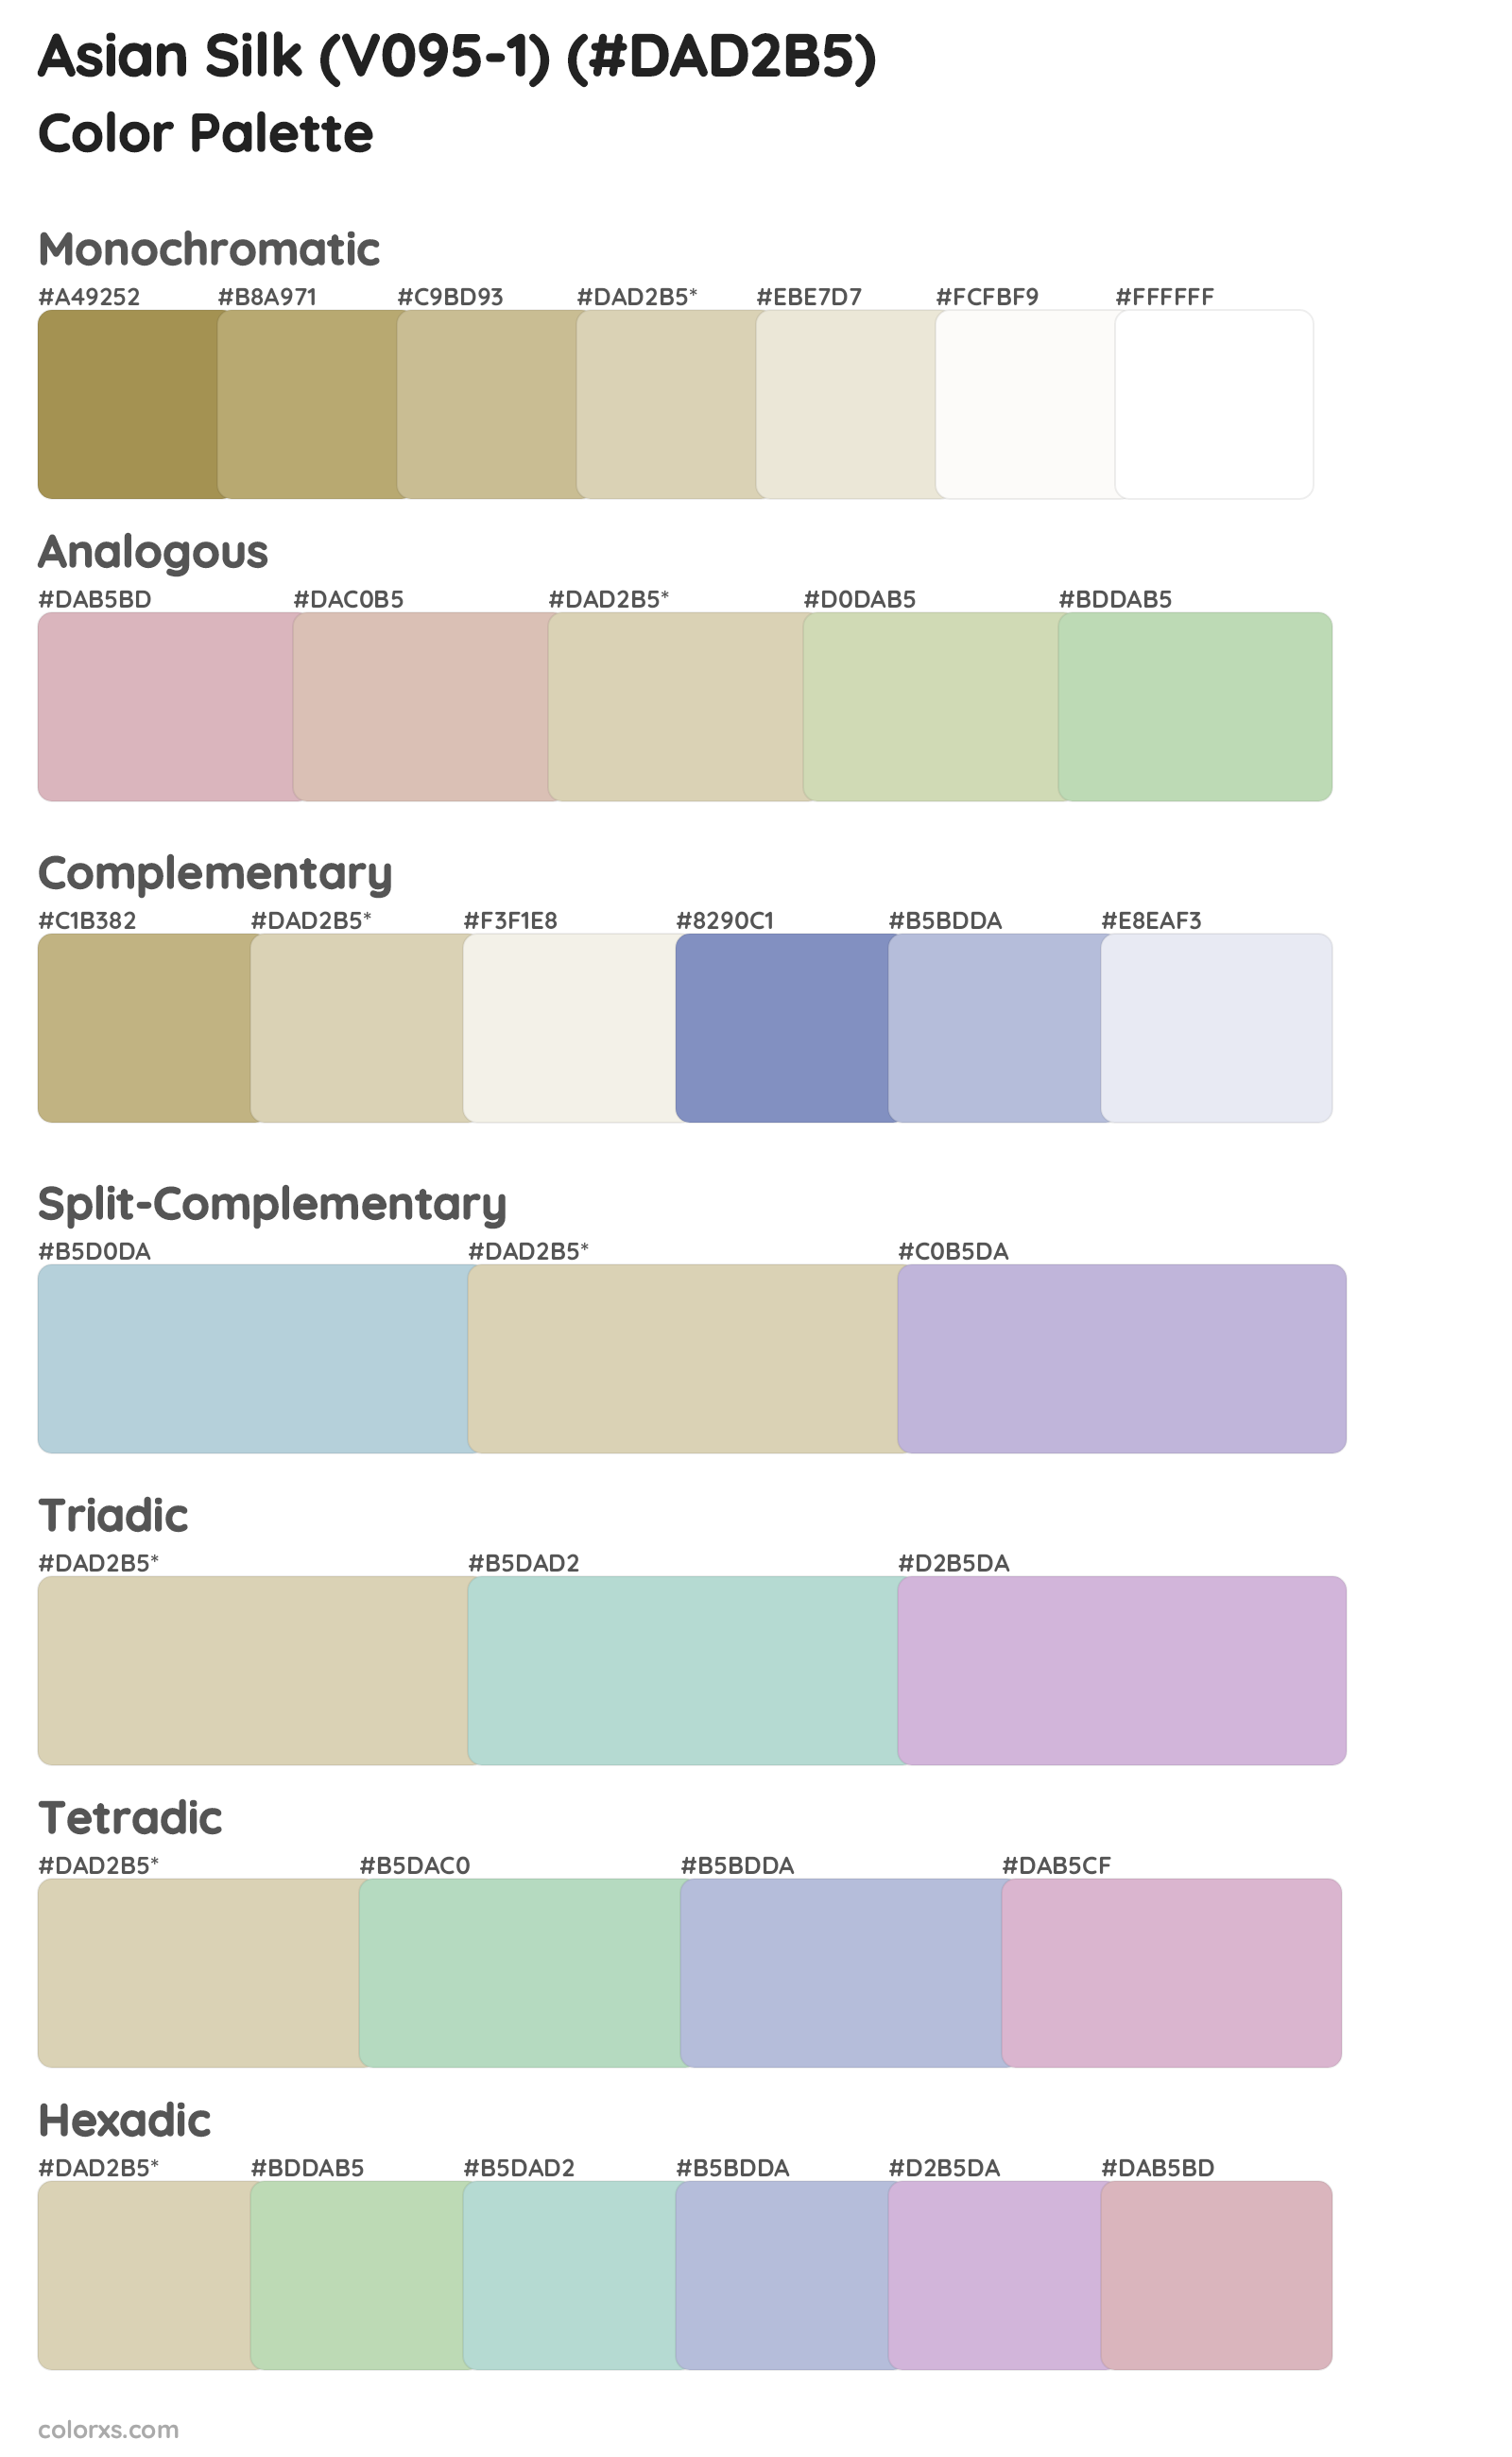 Asian Silk (V095-1) Color Scheme Palettes